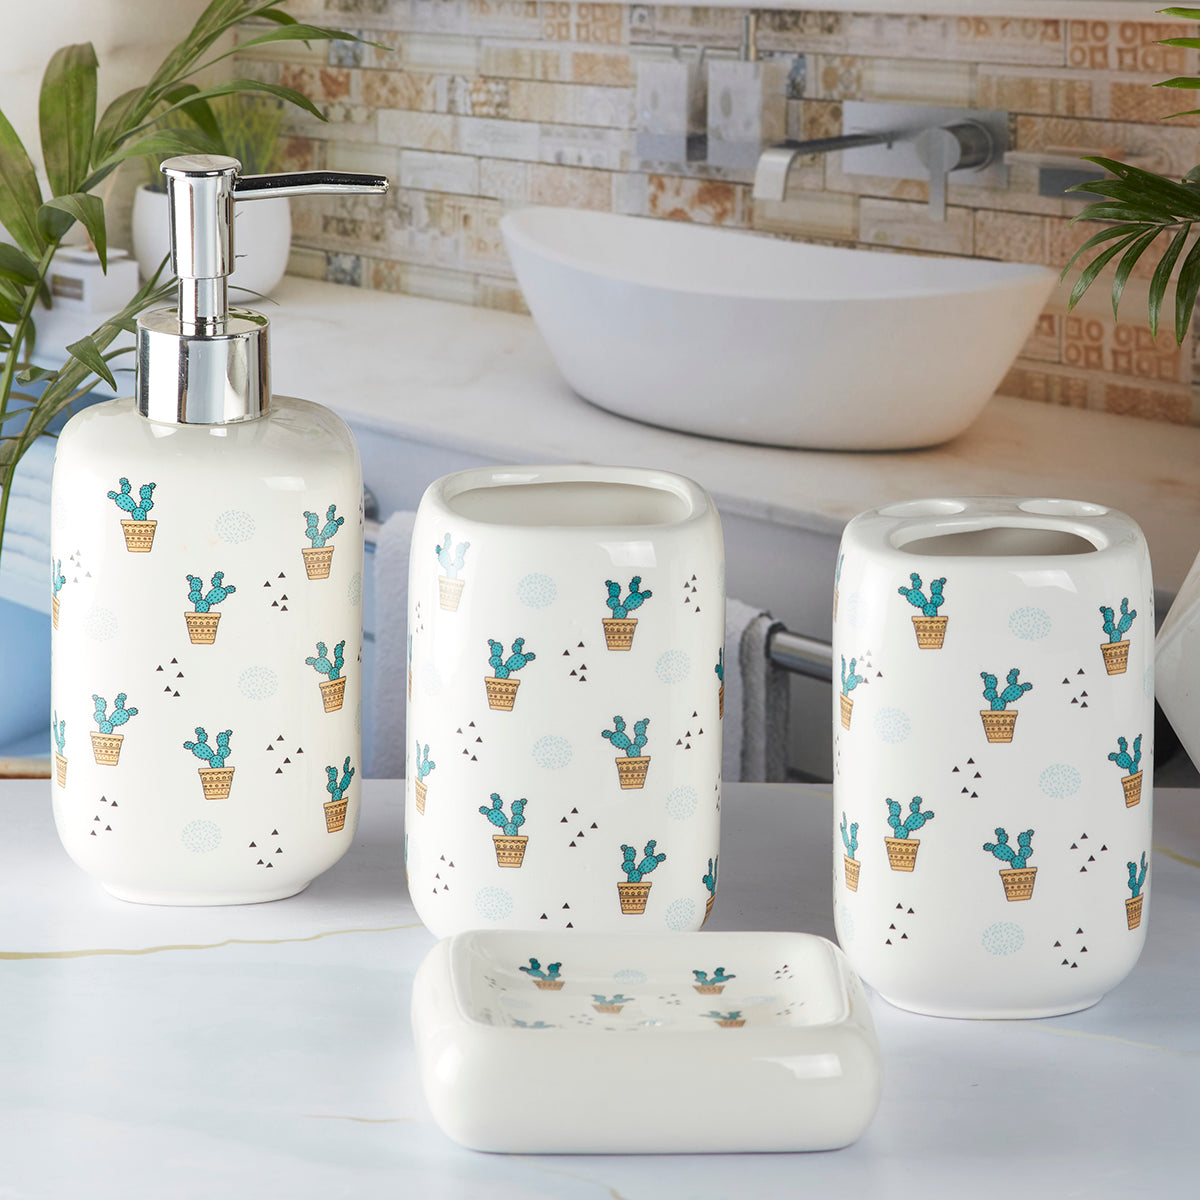 Ceramic Bathroom Accessories Set of 4 Bath Set with Soap Dispenser (9900)